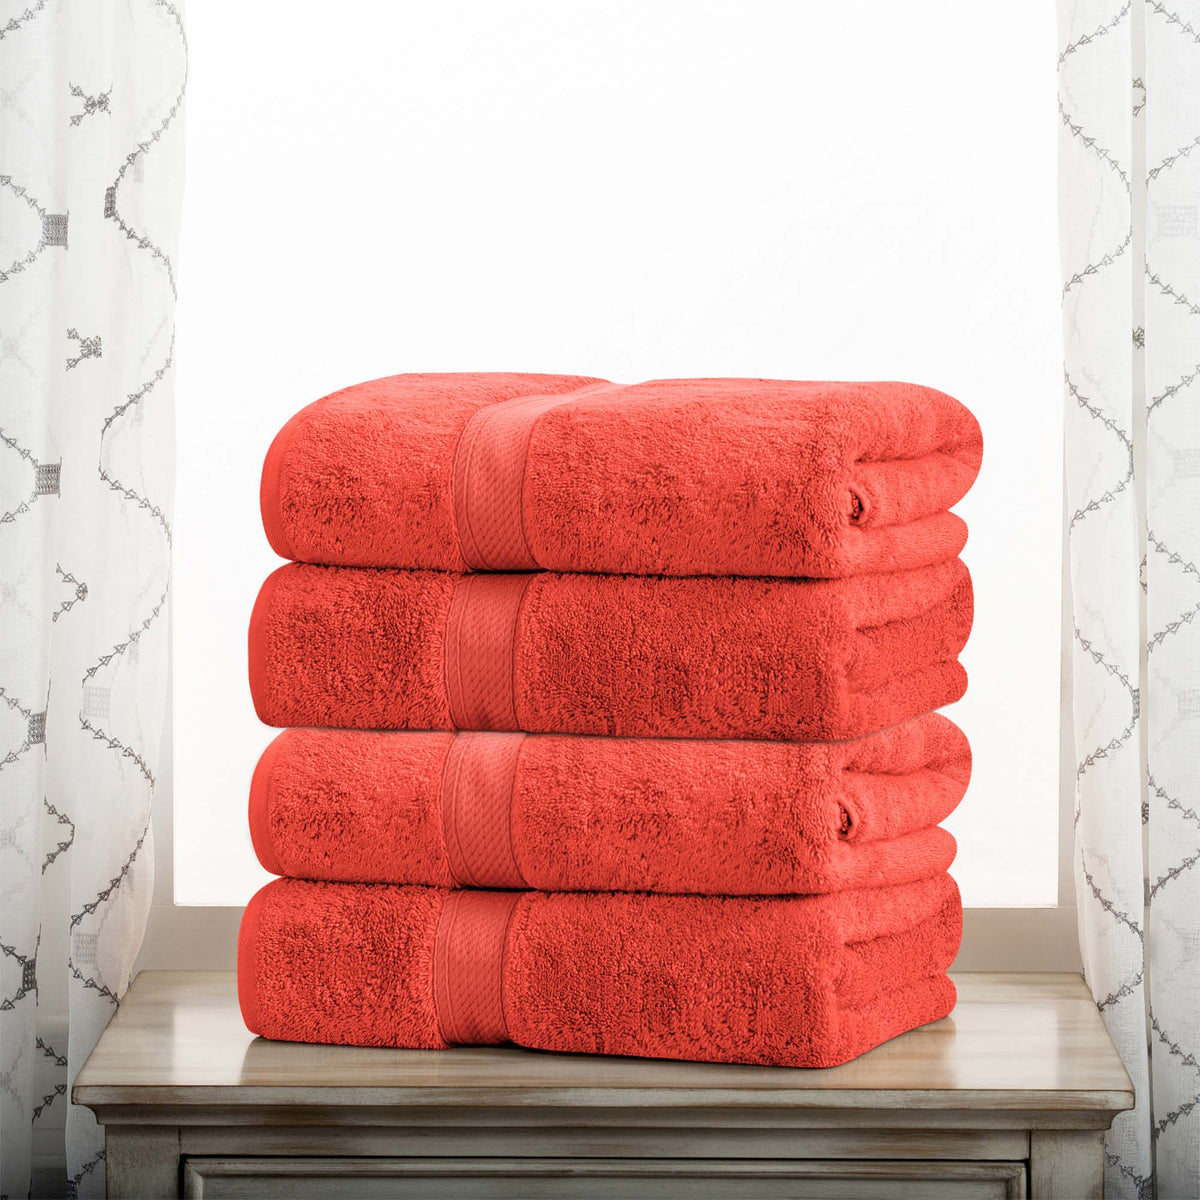 Buy Burnt Orange Egyptian Cotton Towel from Next USA